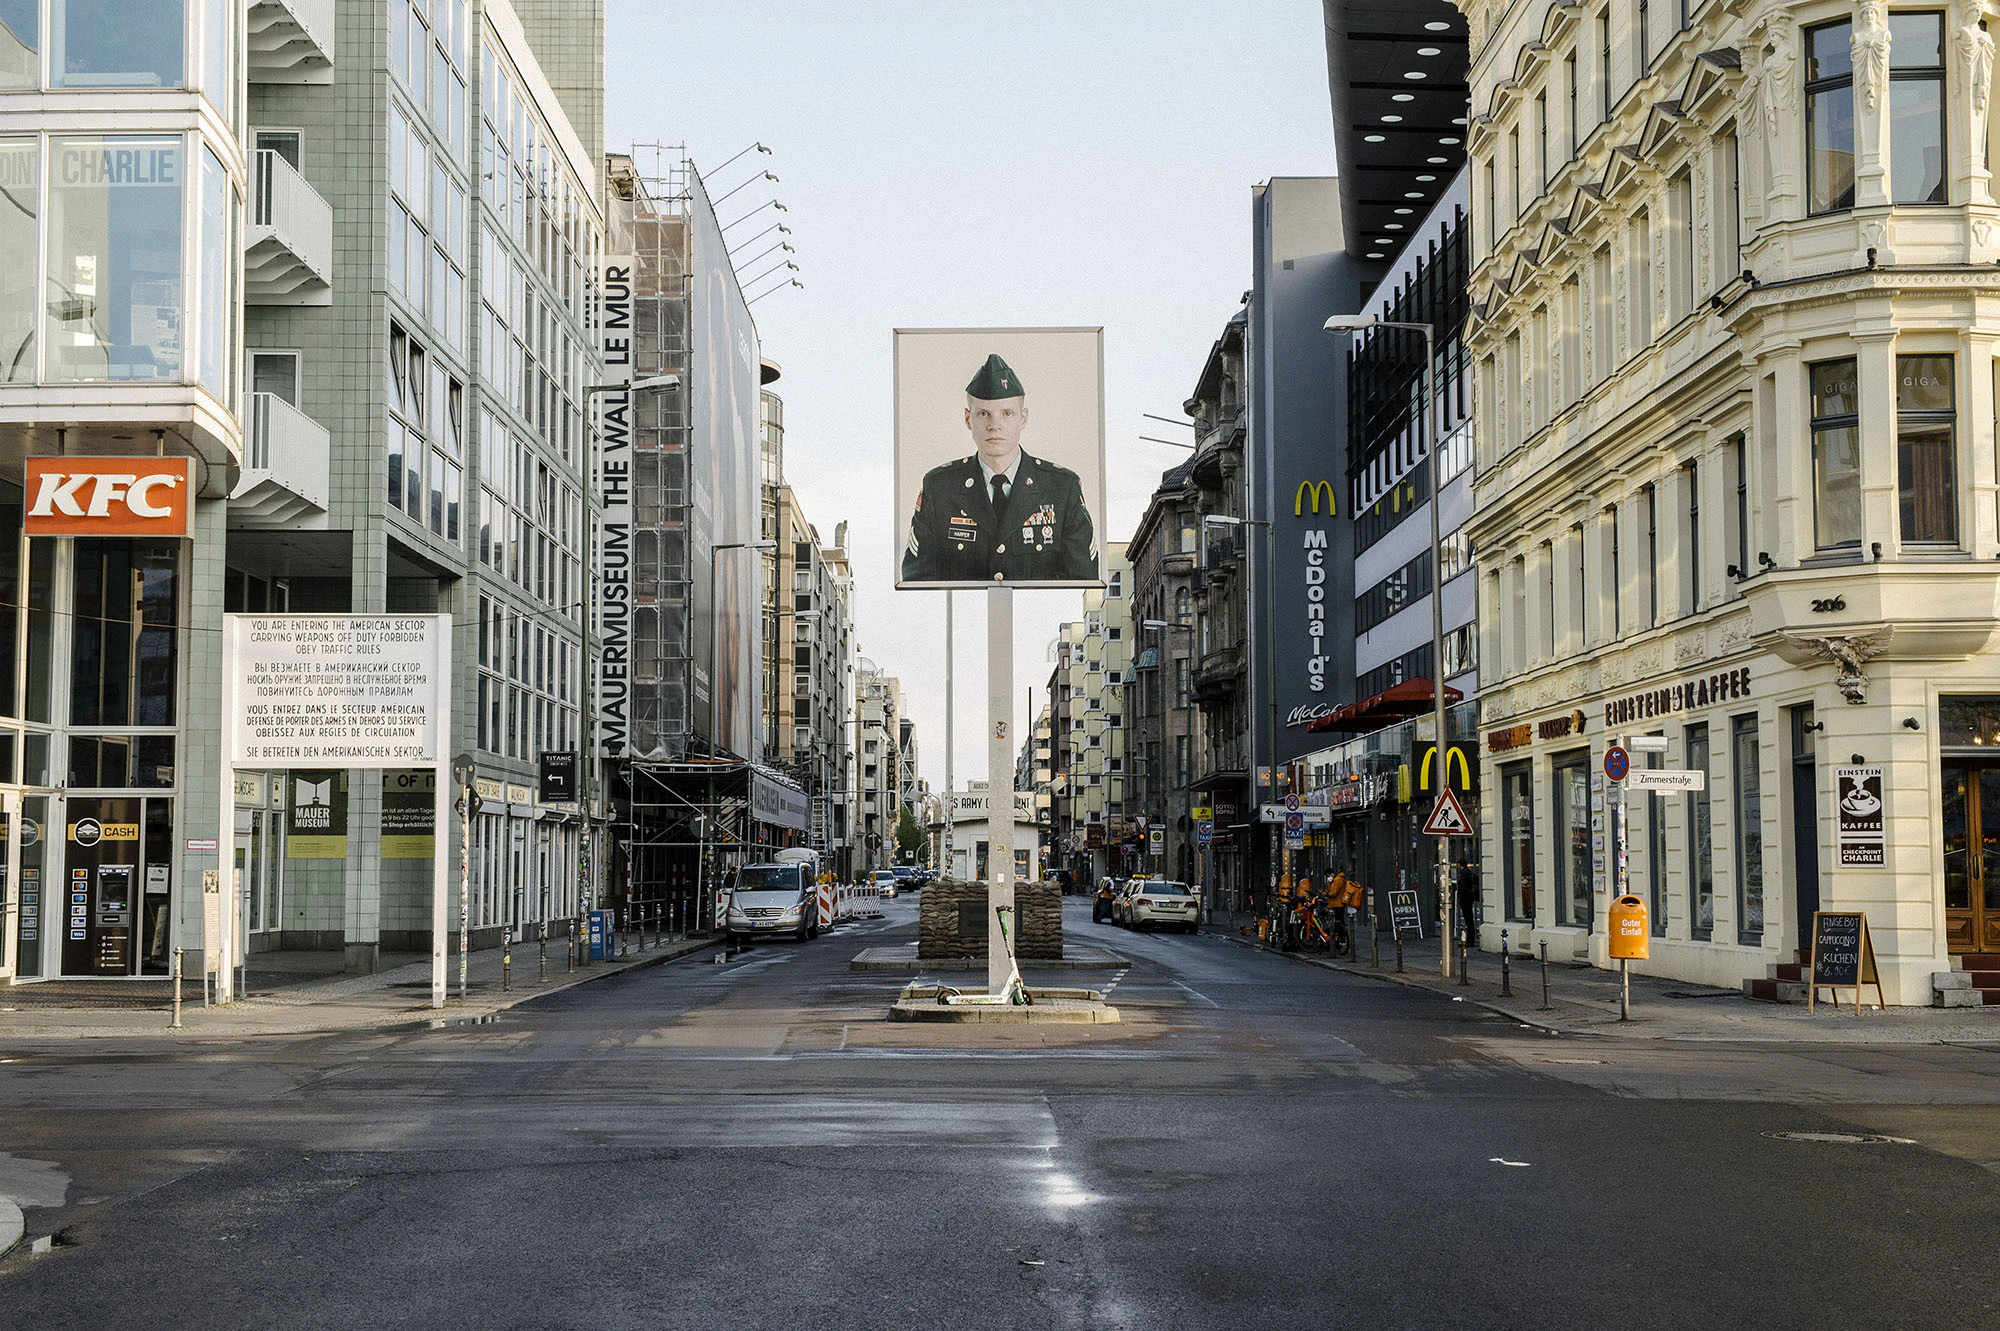 "The Invisible Wall" Checkpoint Charlie, Friedrichstraße, Kreuzberg, Berlin (2021) 